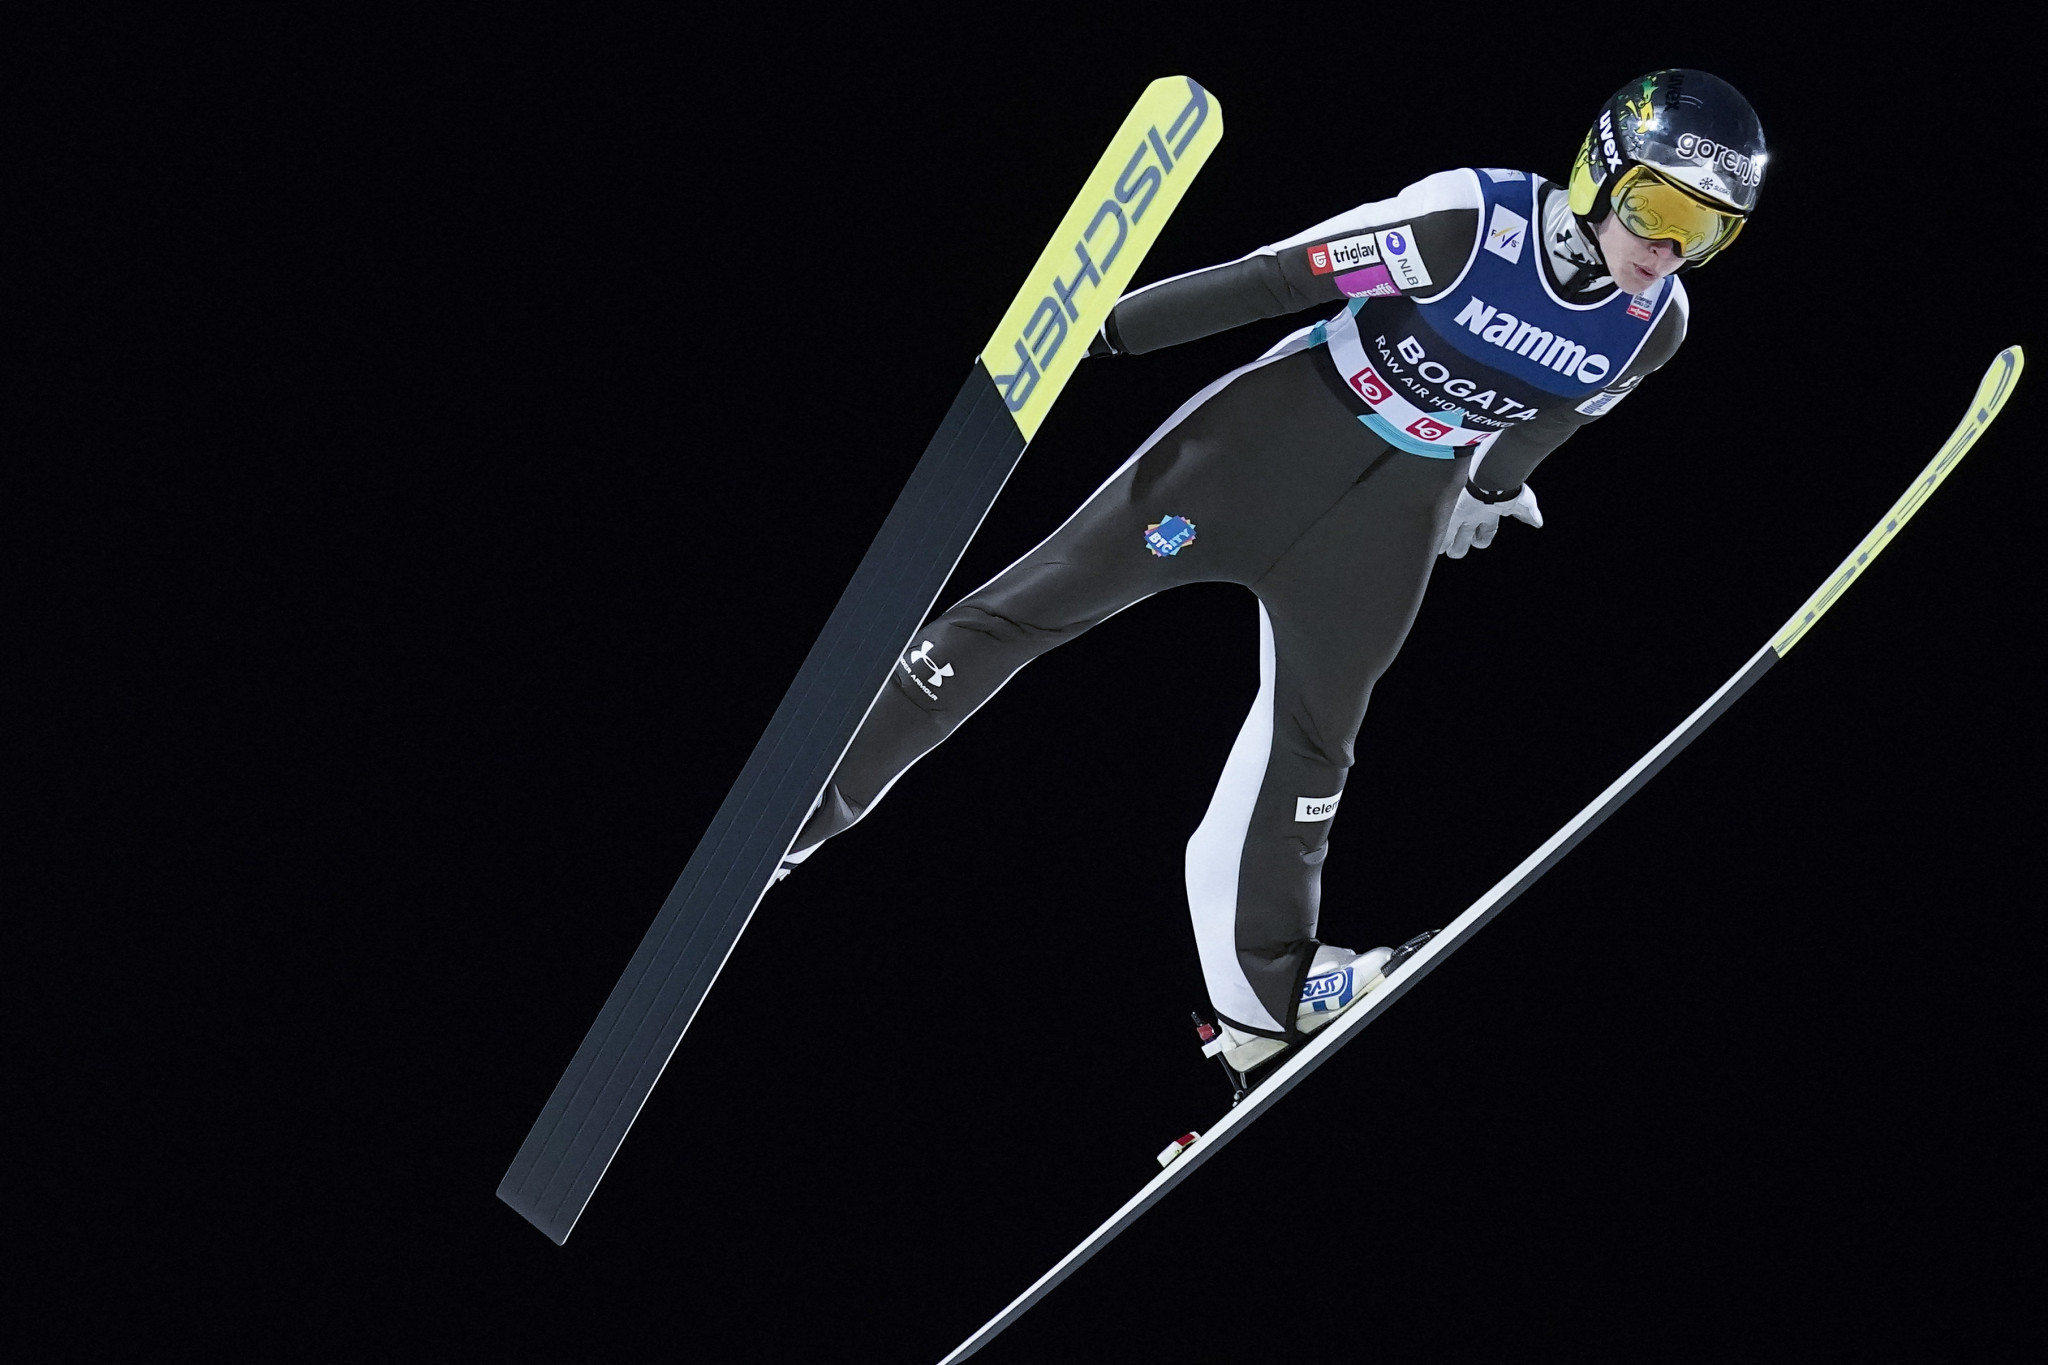 Ursa Bogataj led qualification in Oberhof ©Getty Images